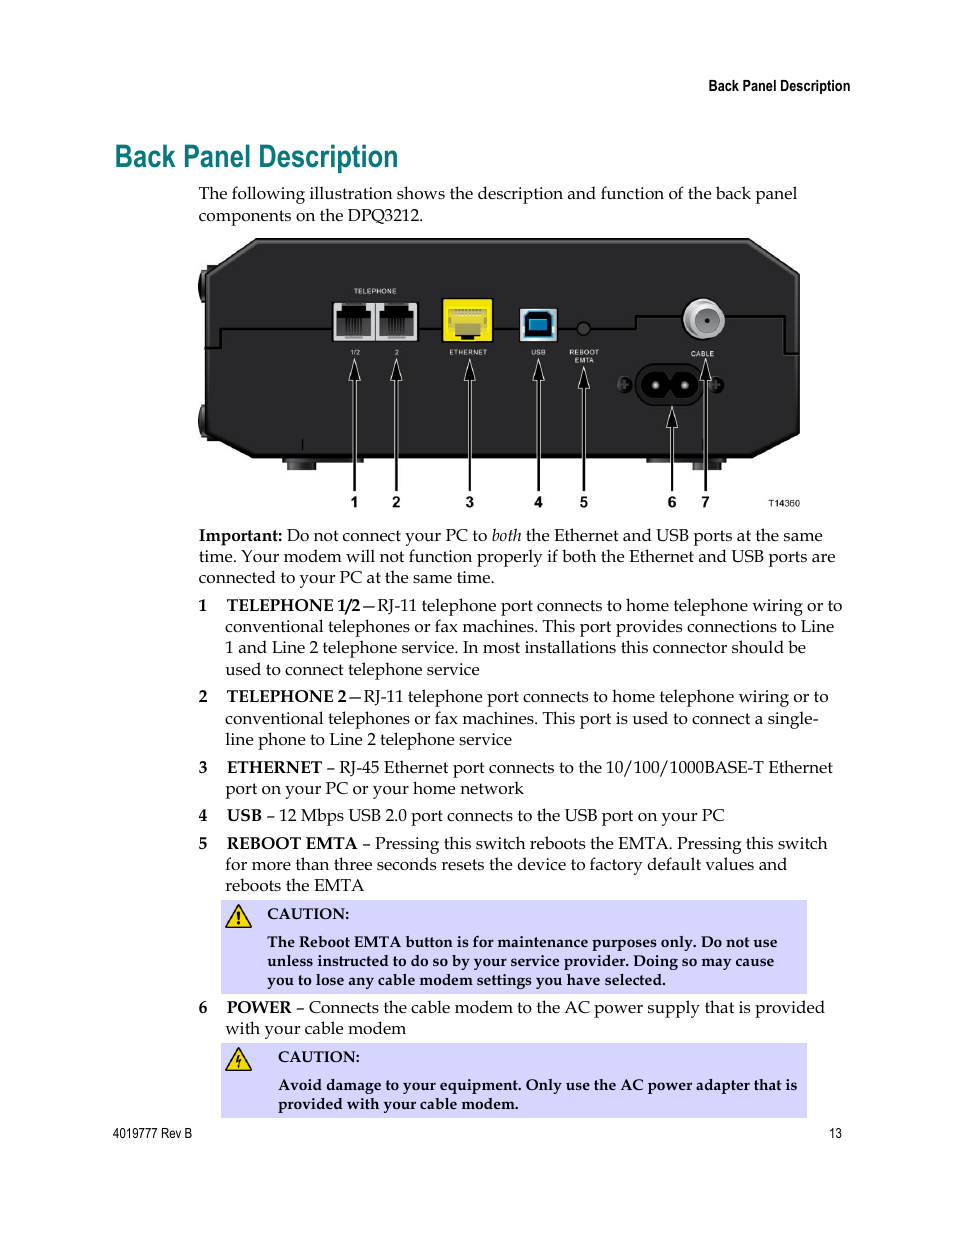 Back panel description | Cisco DPQ3212 User Manual | Page 13 / 40